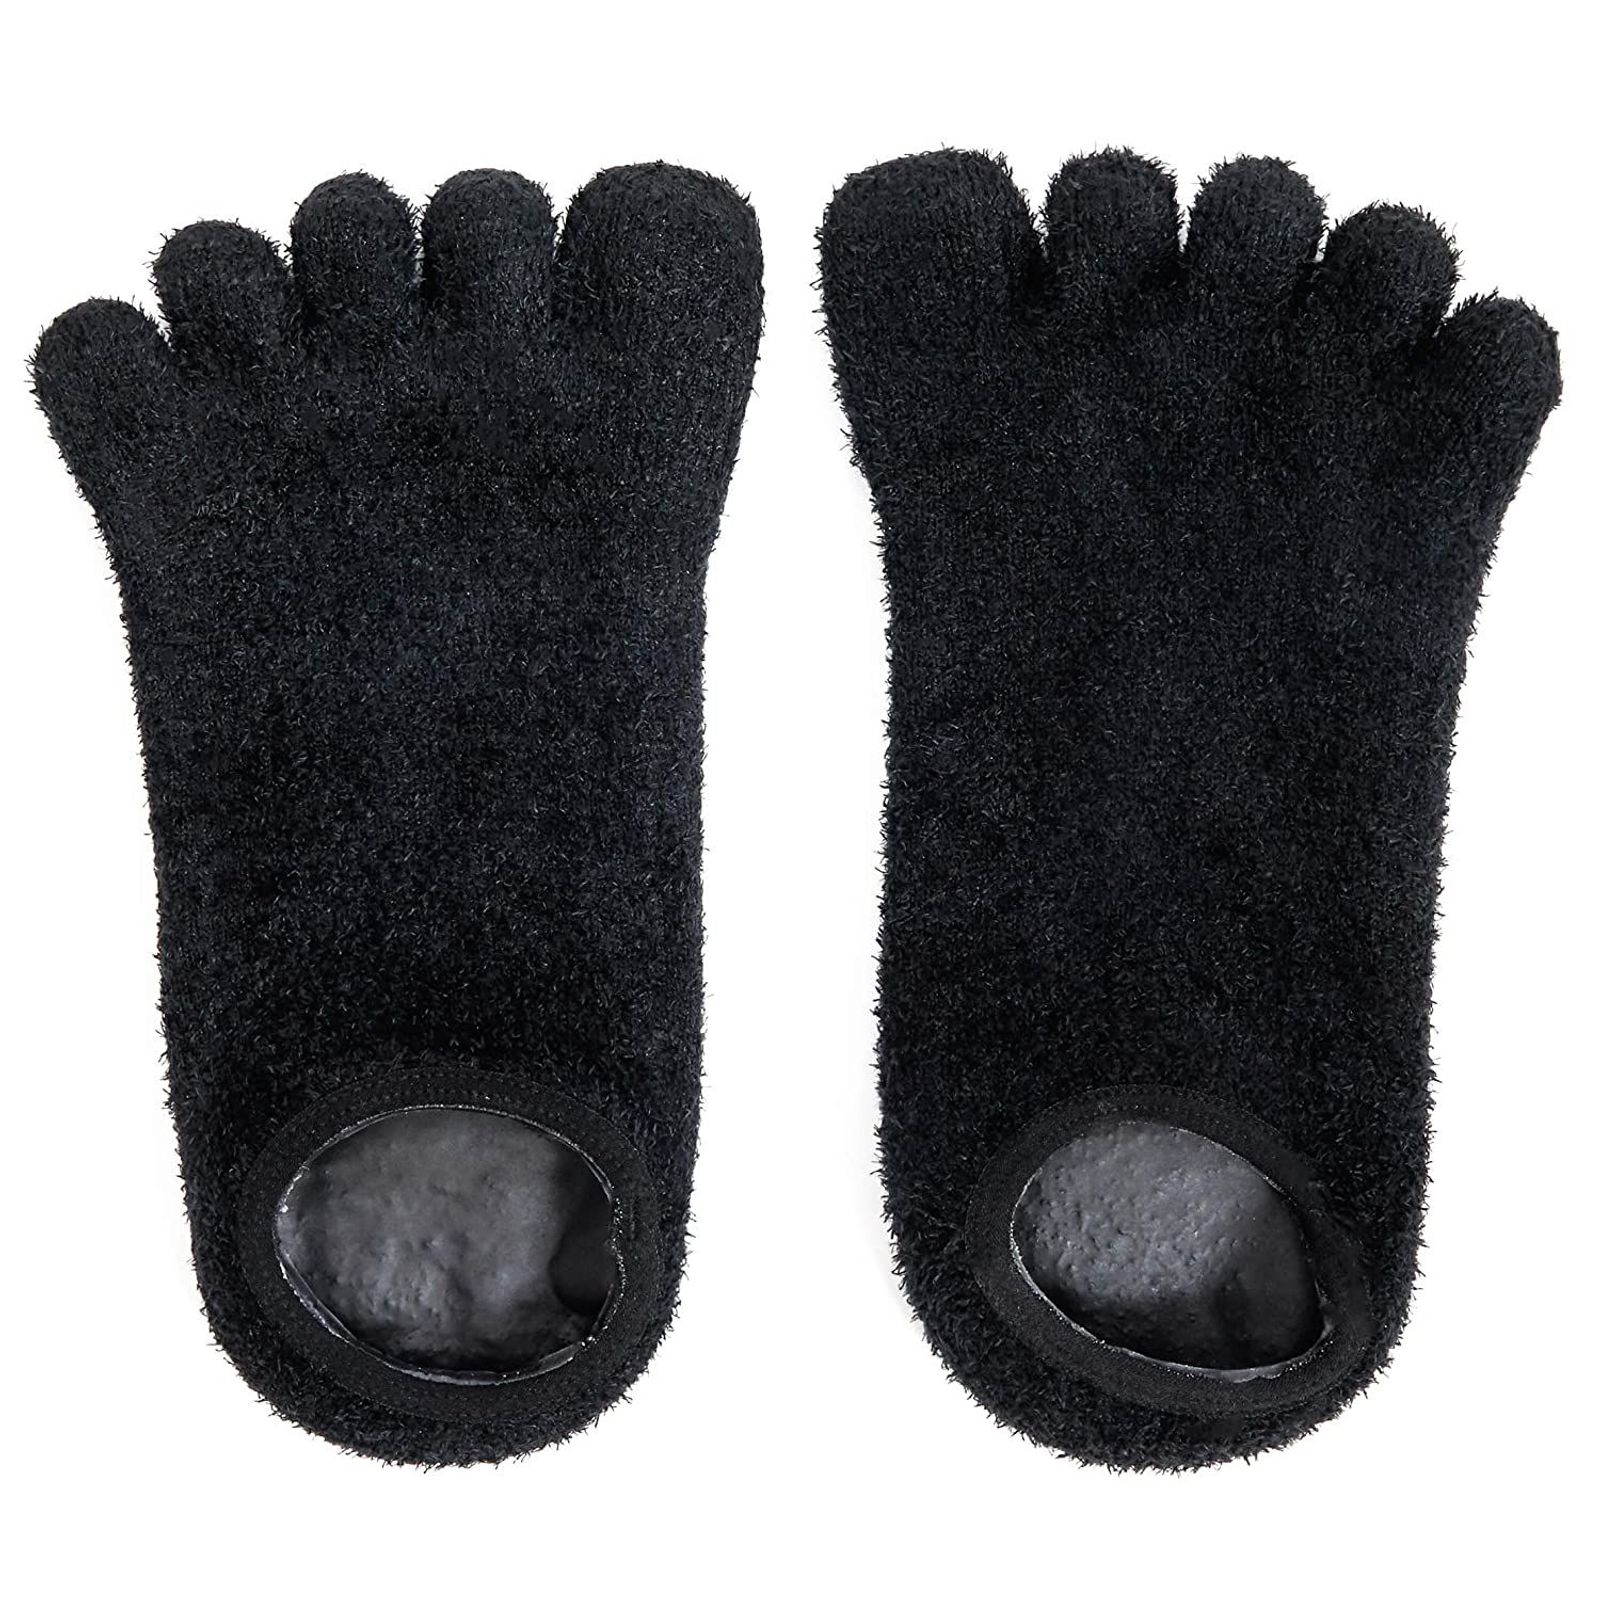 Black 5-Toe Gel Socks (US 7-10, 2 Pairs) - image 4 of 7